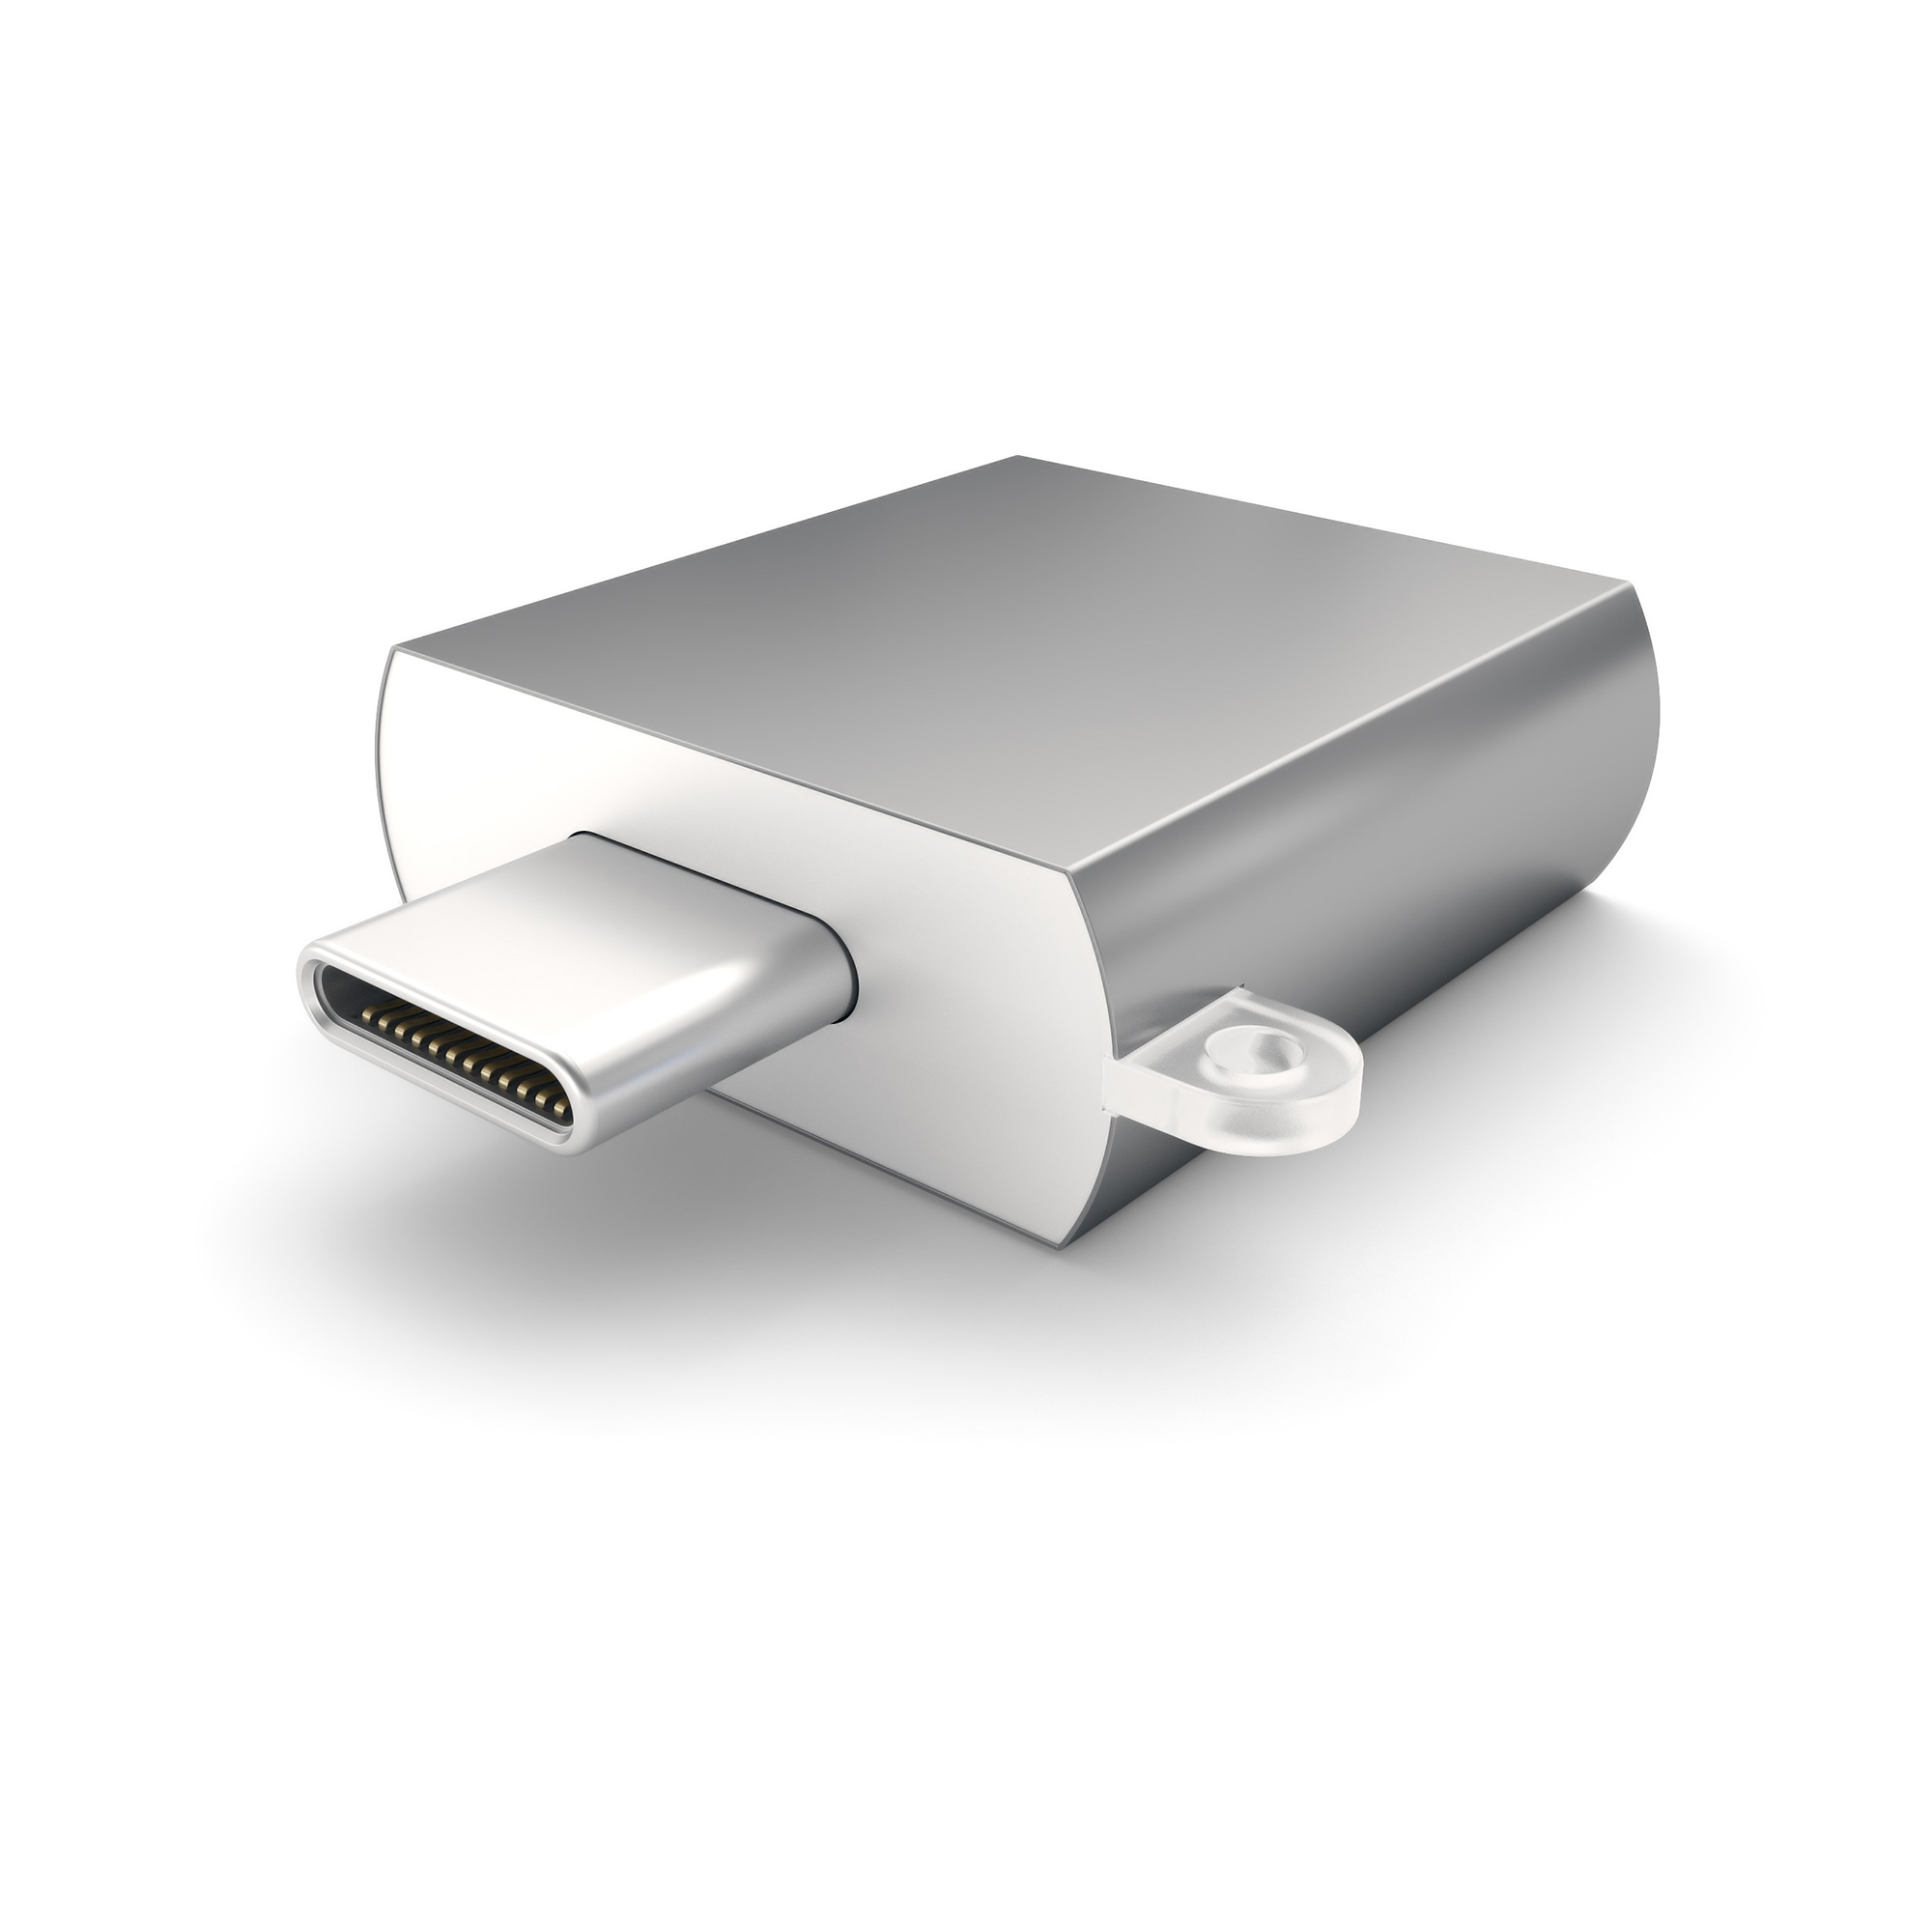 Адаптер Satechi USB 3.0 Type-C to USB 3.0 Type-A Space Gray ST-TCUAM адаптер satechi usb type a to type c silver